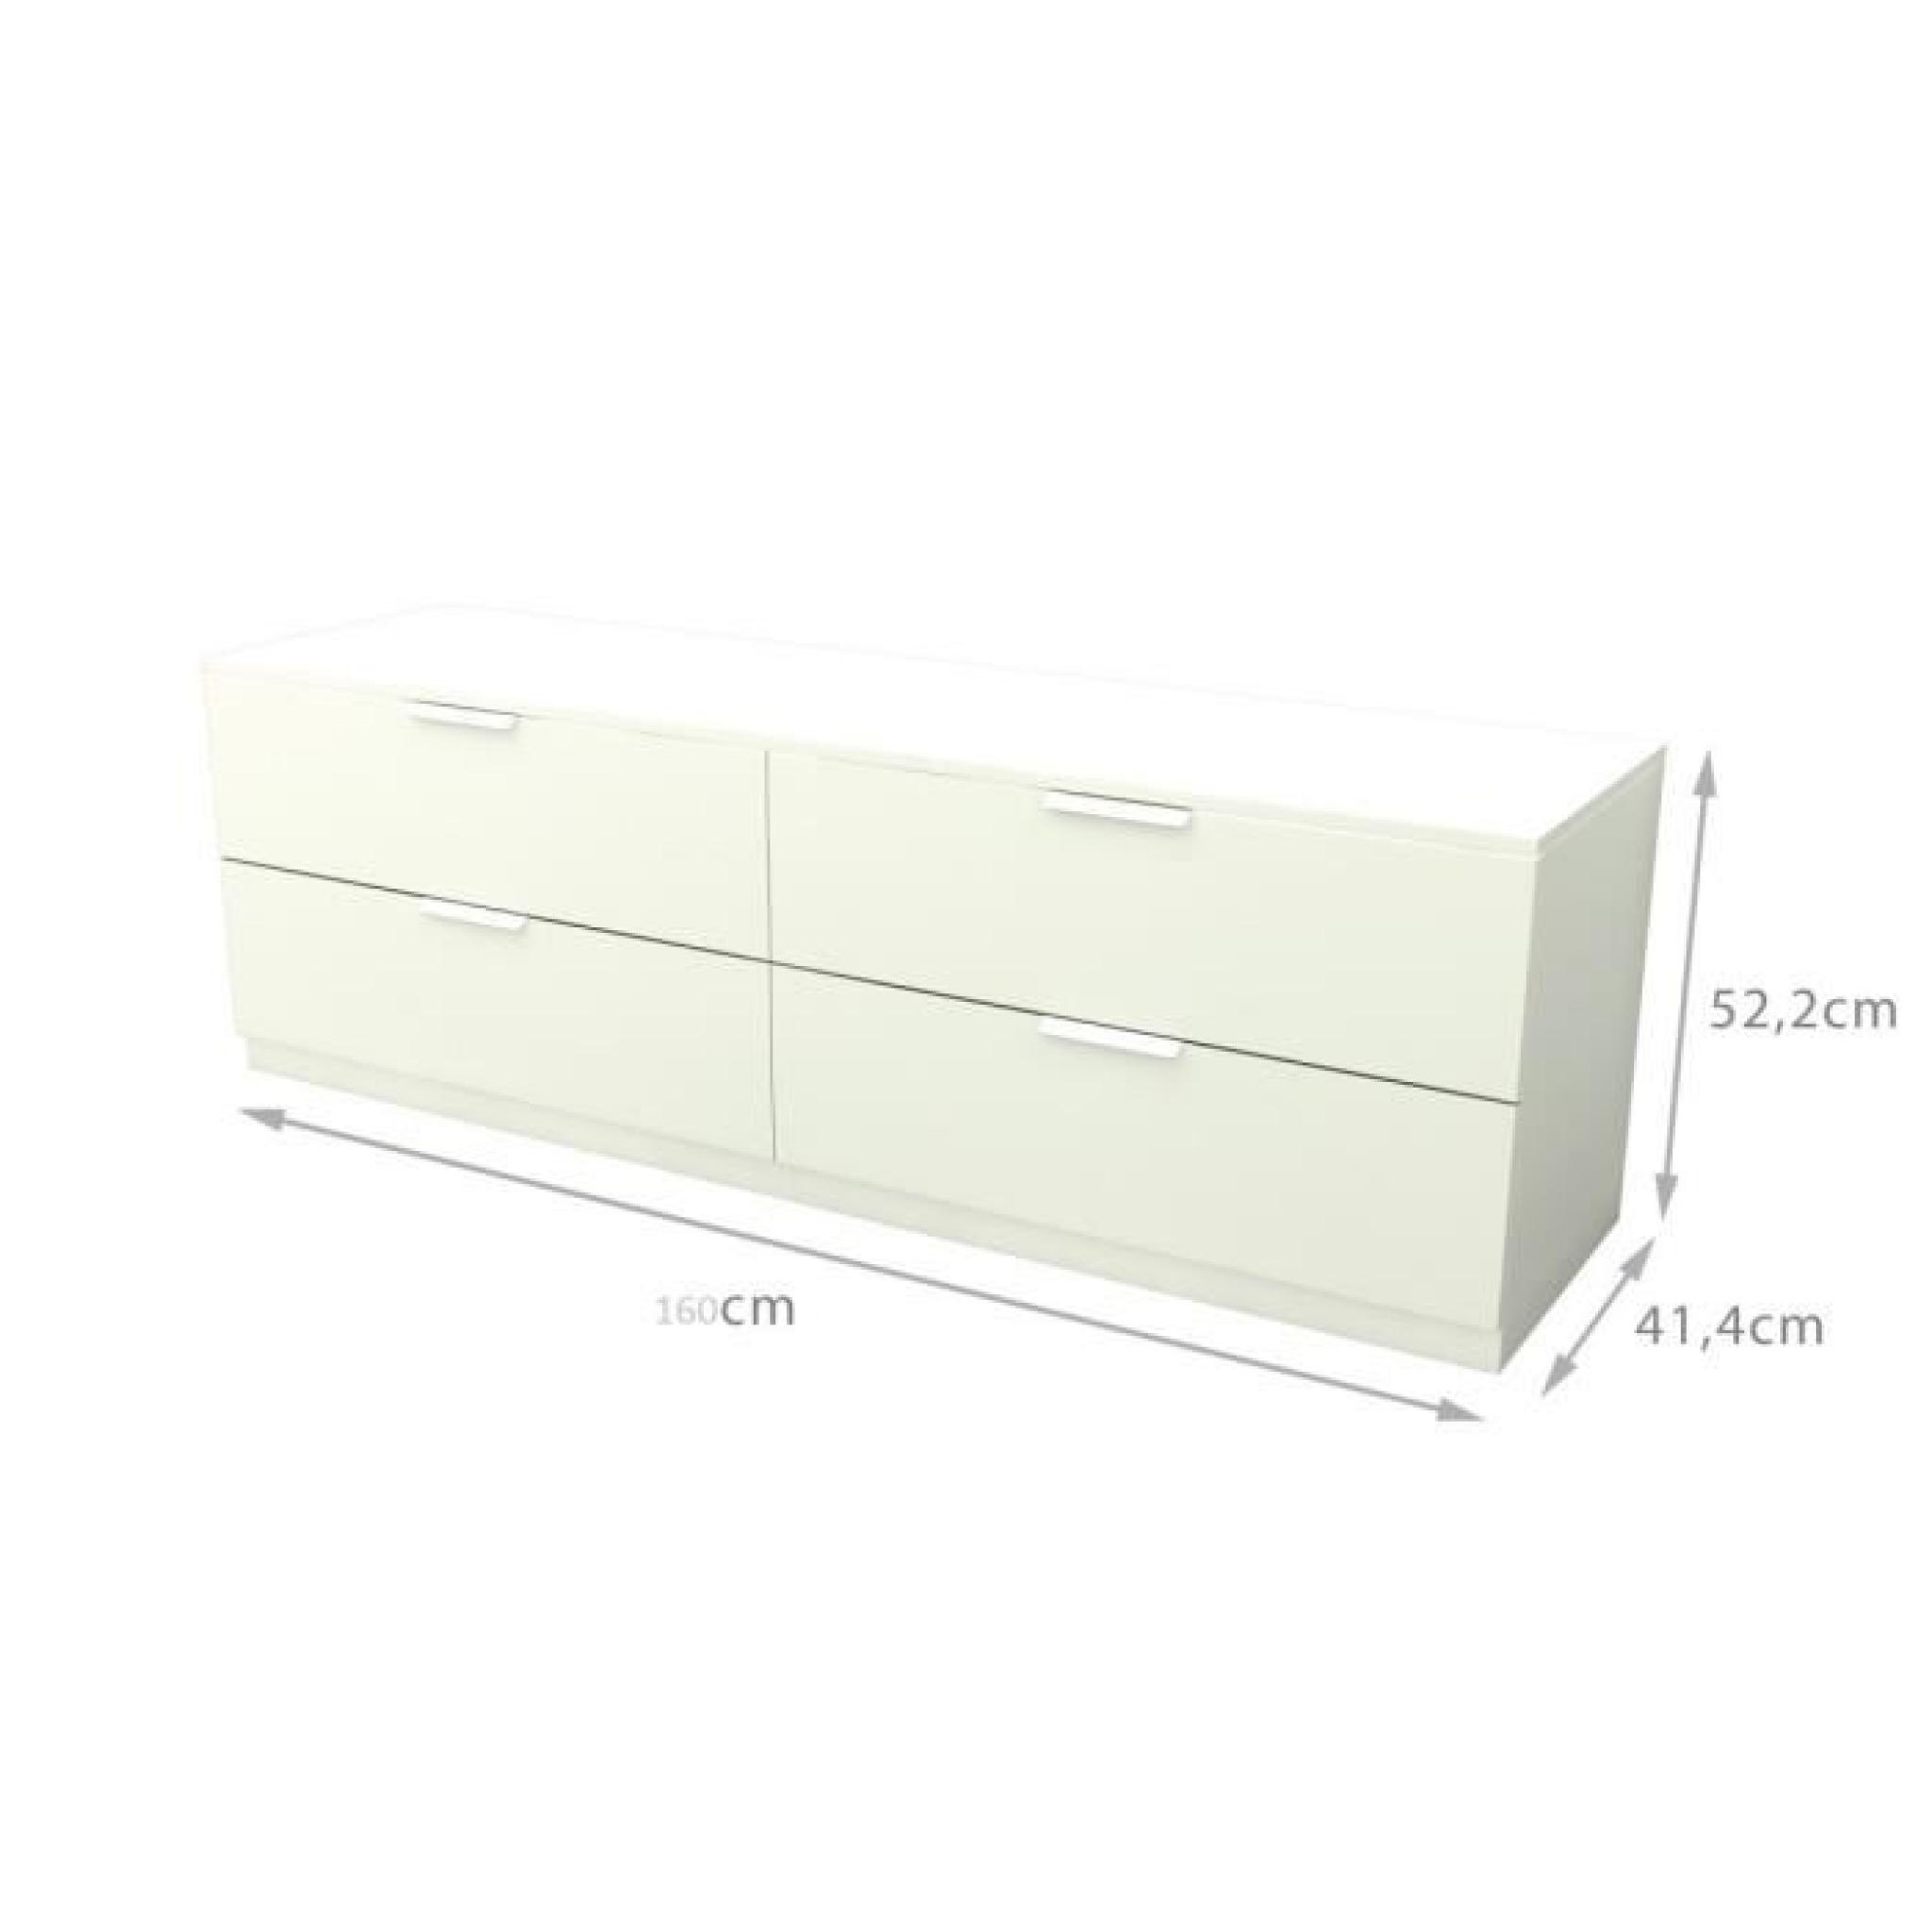 BILLUND Commode 4 tiroirs 160cm blanc pas cher